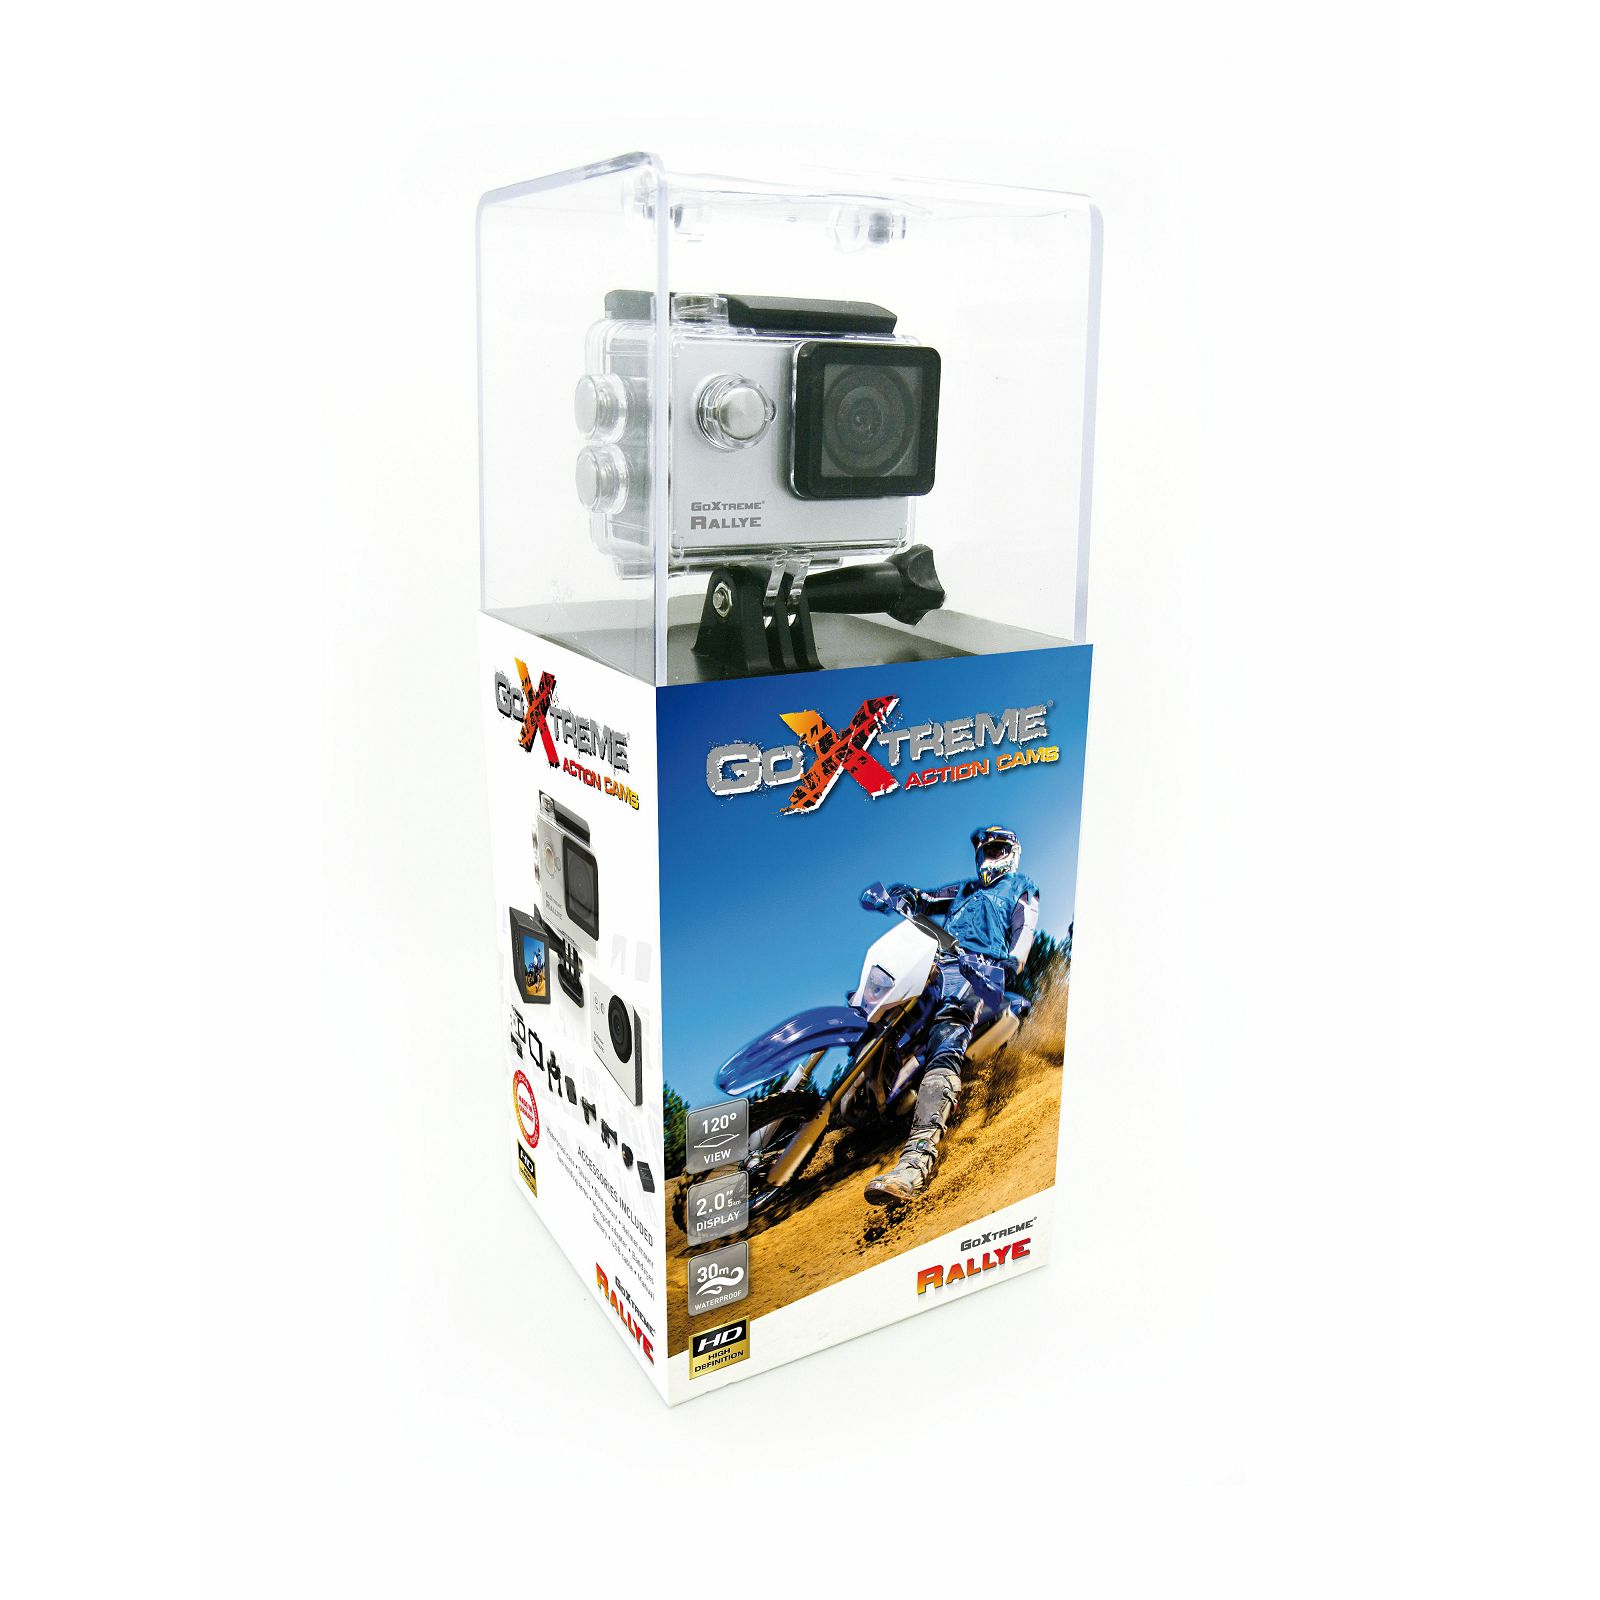 GoXtreme Rallye Silver Action Camera Waterproof srebrena sportska akcijska kamera vodootporna do 30m (20125)